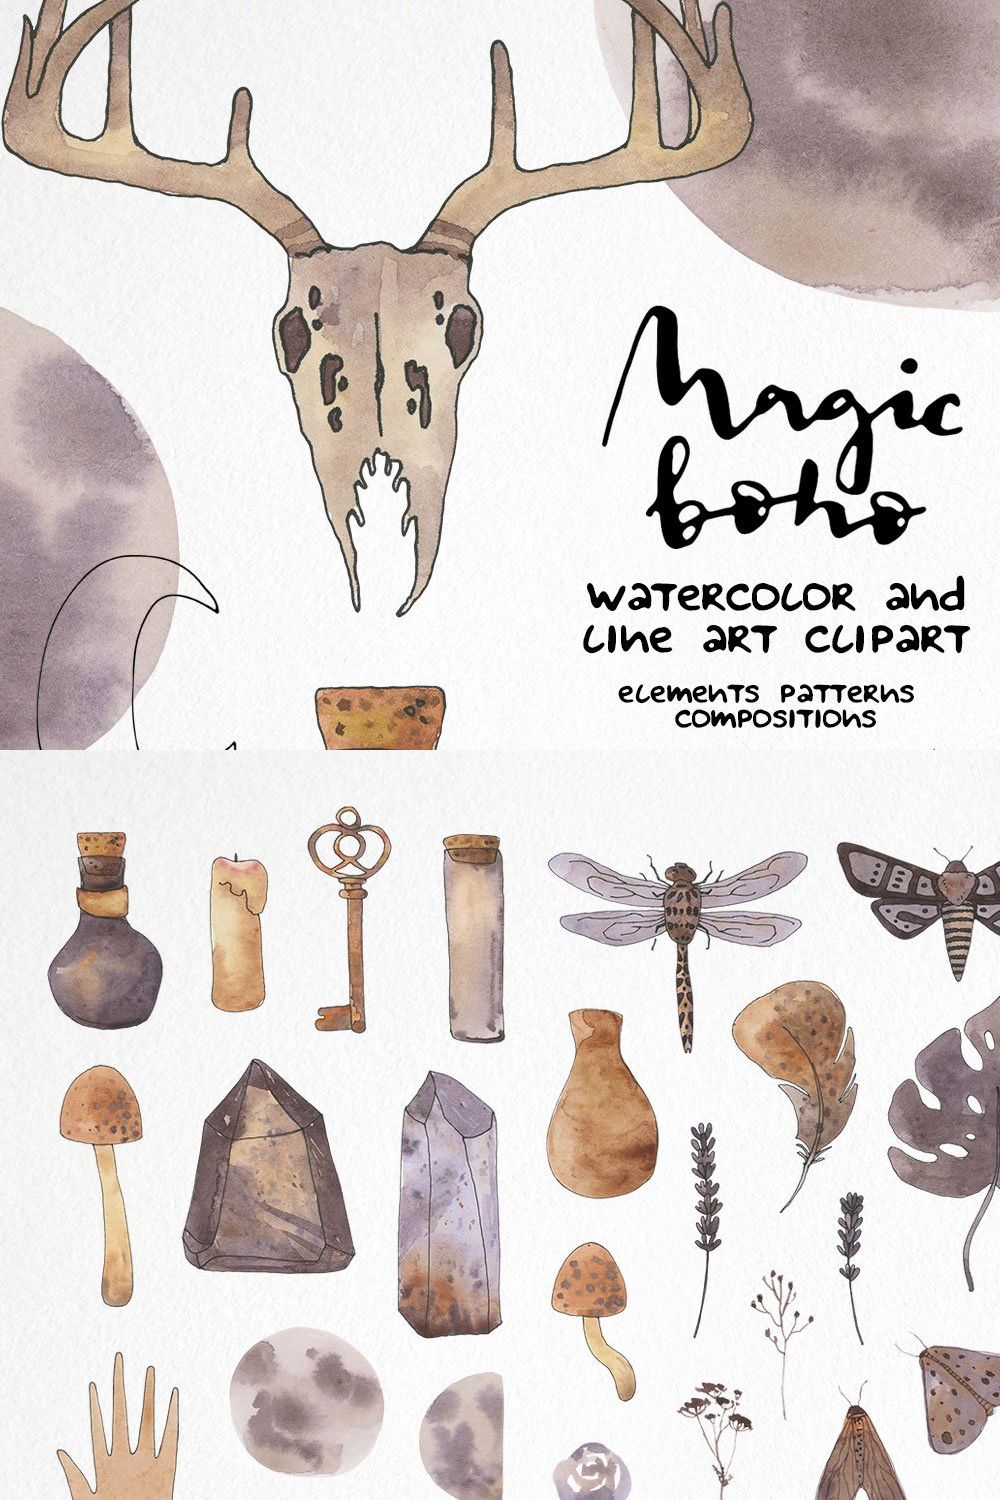 Magic boho watercolor clipart pinterest preview image.